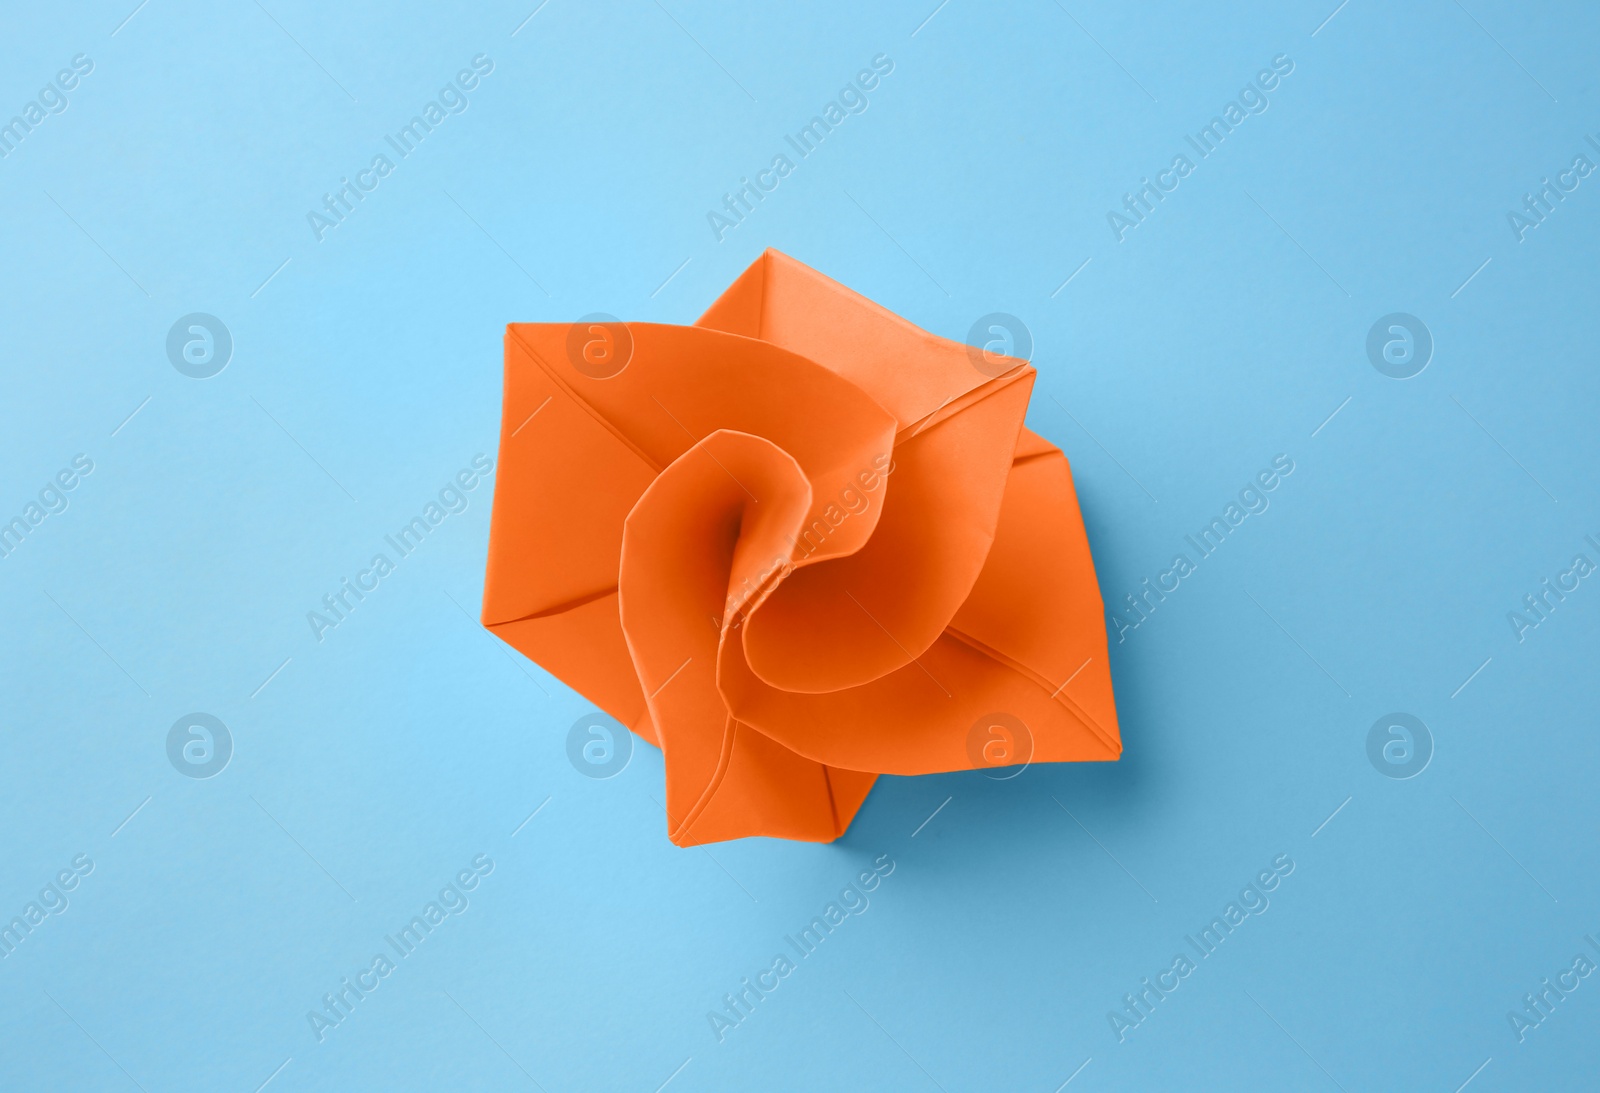 Photo of Origami art. Handmade orange paper flower on light blue background, top view